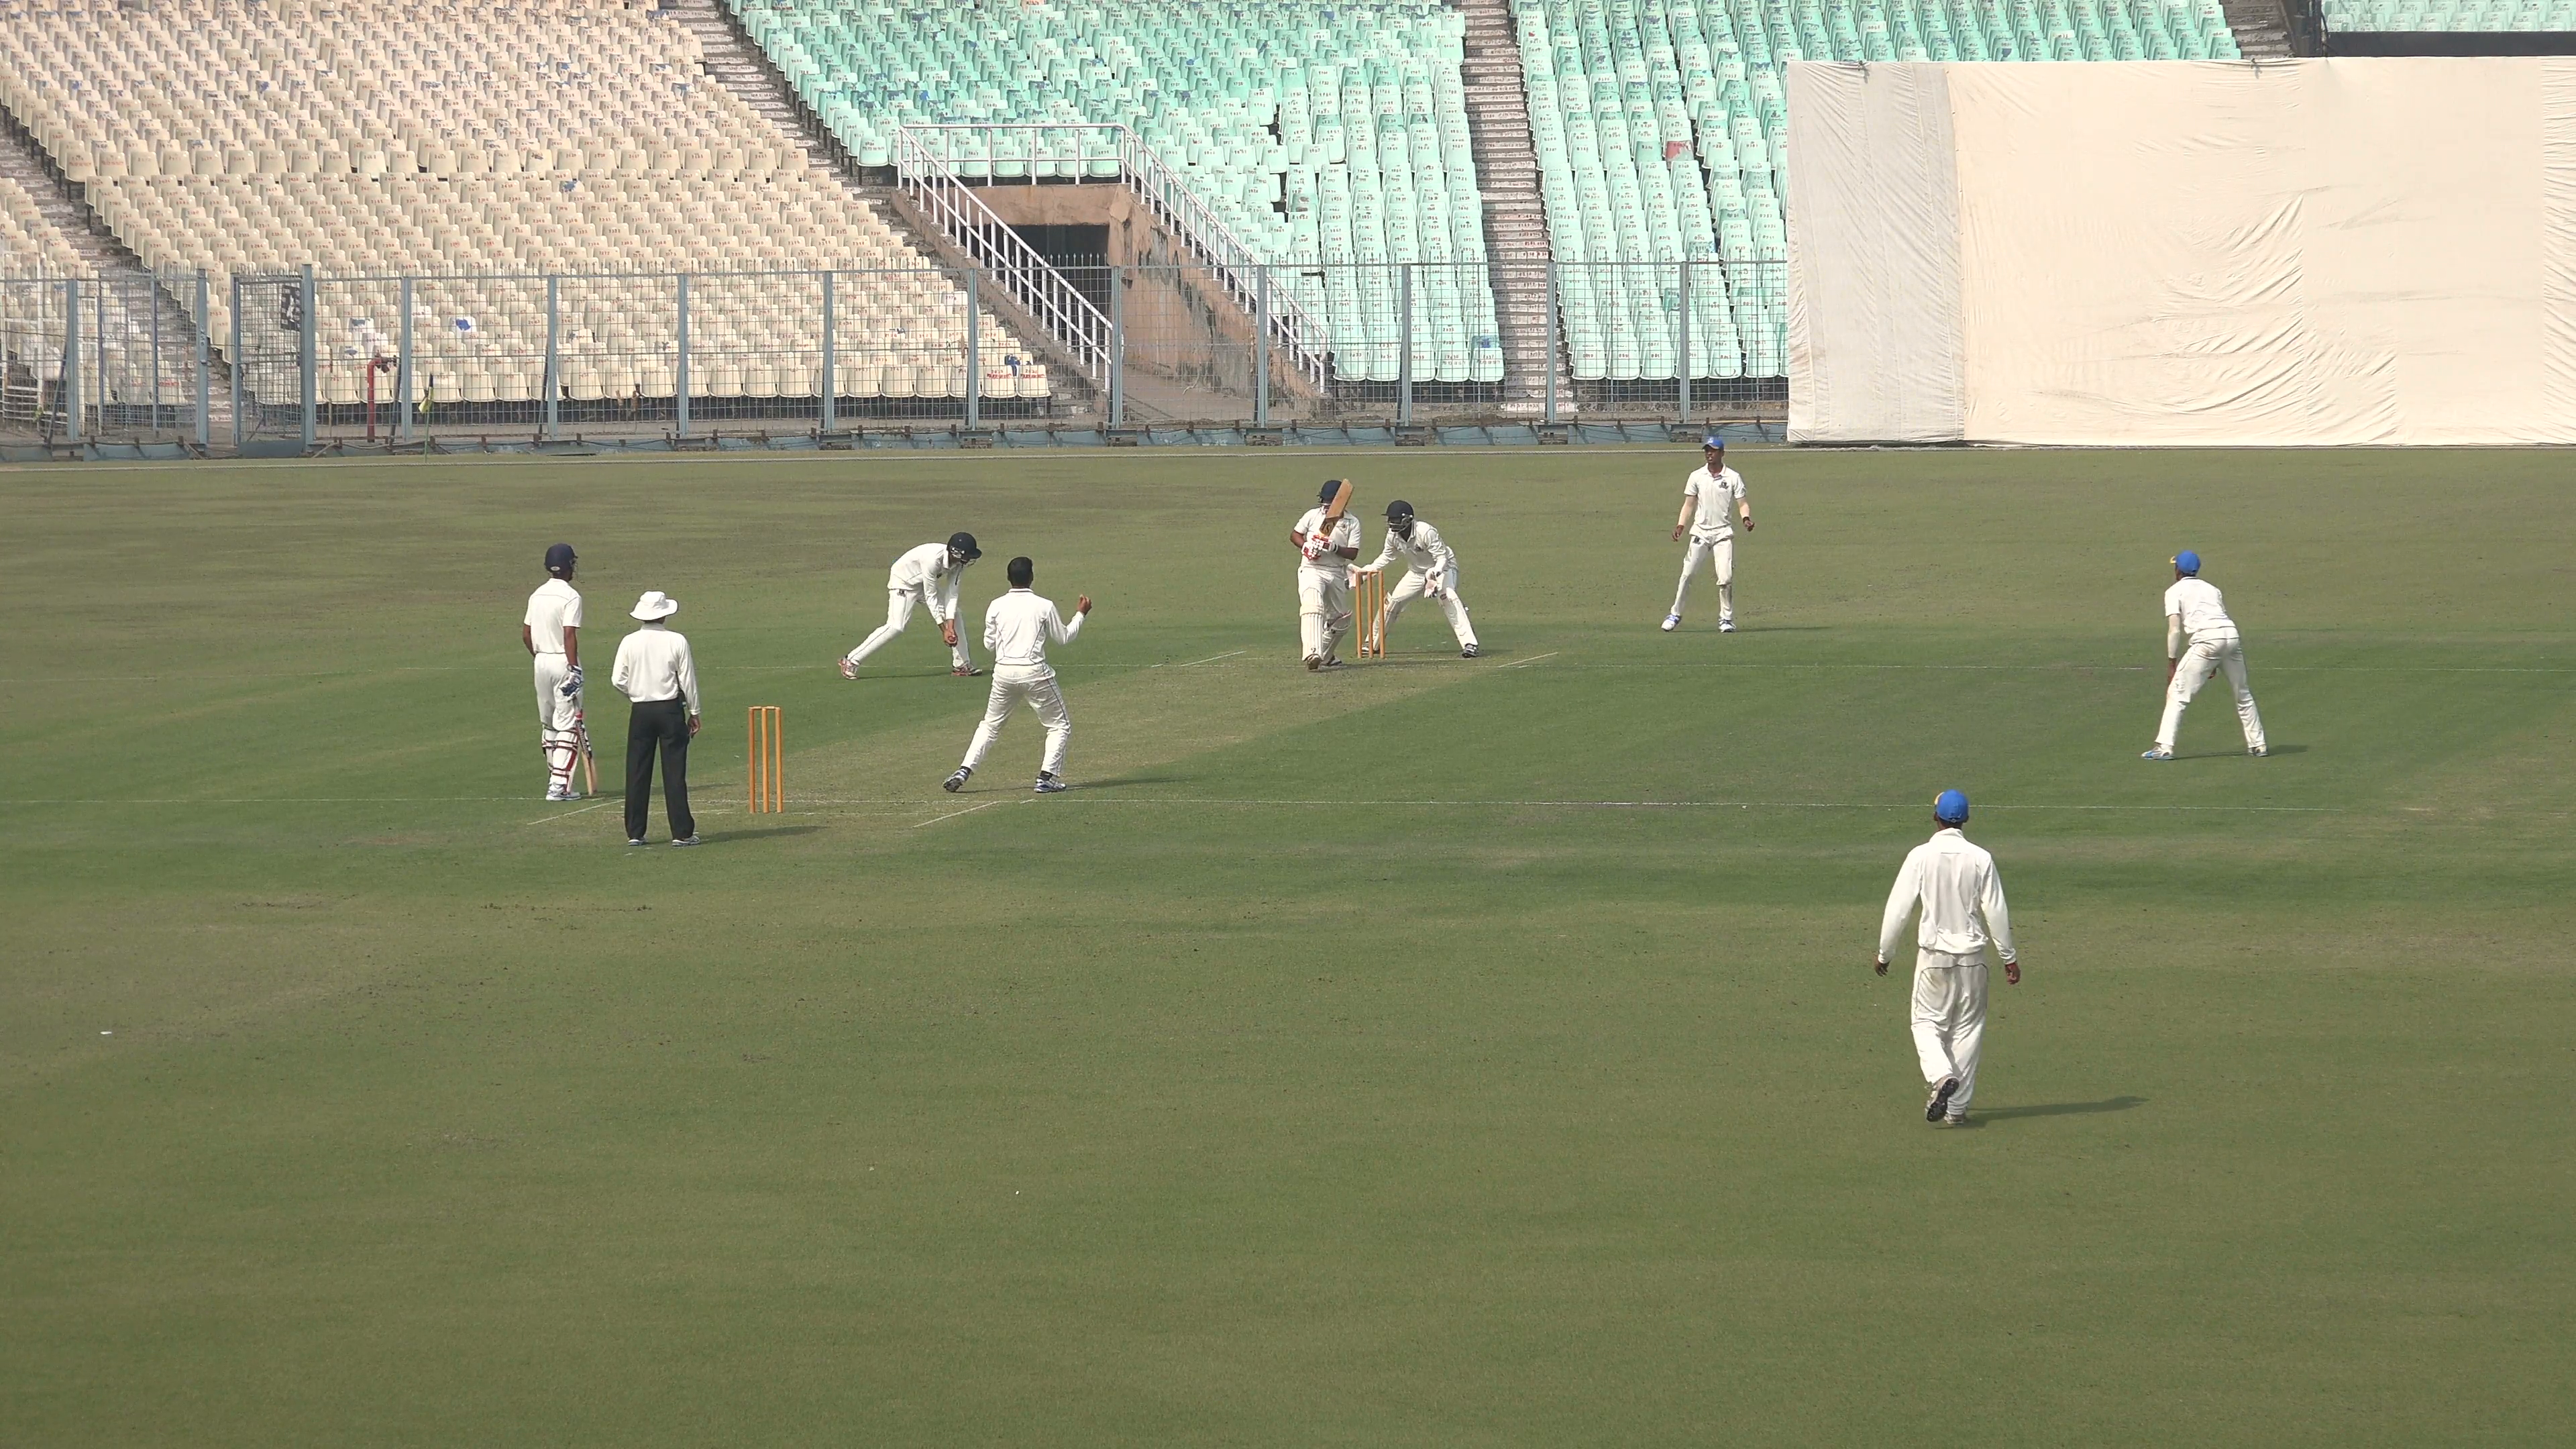 Practice cricket match in a stadium in Kolkata, India Stock Video ...